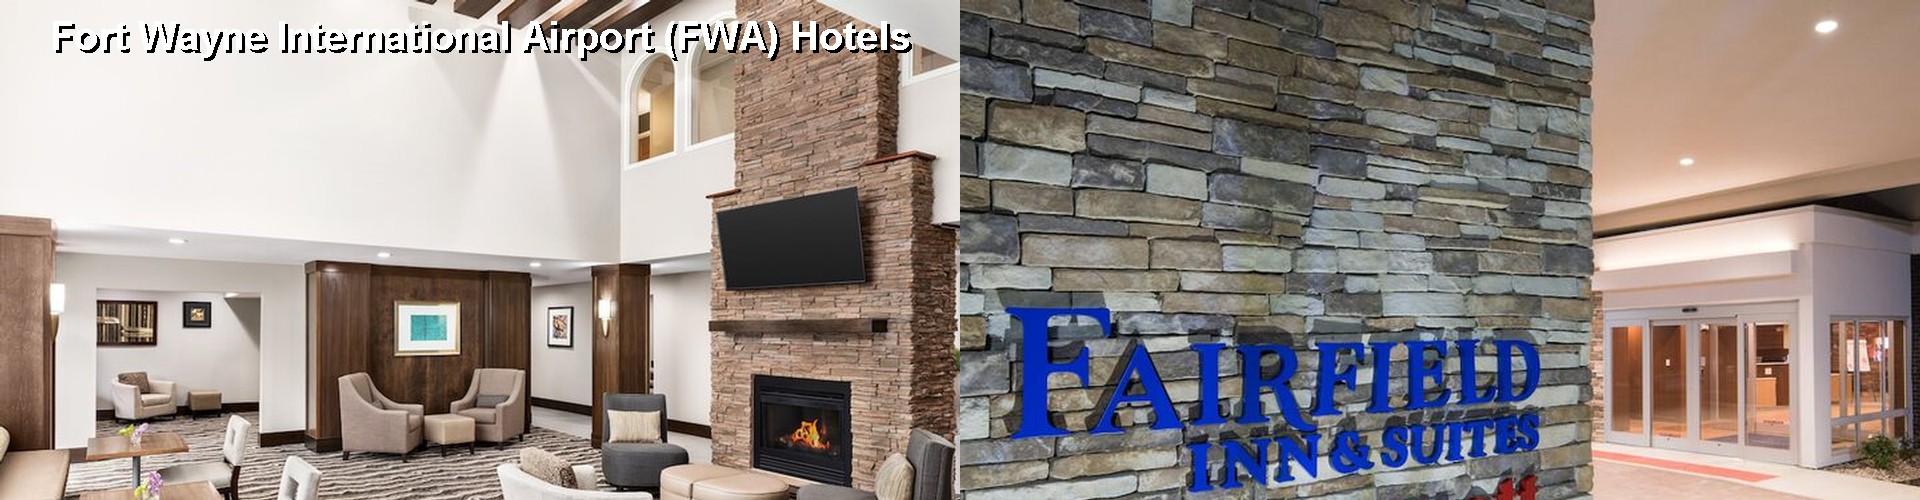 5 Best Hotels near Fort Wayne International Airport (FWA)